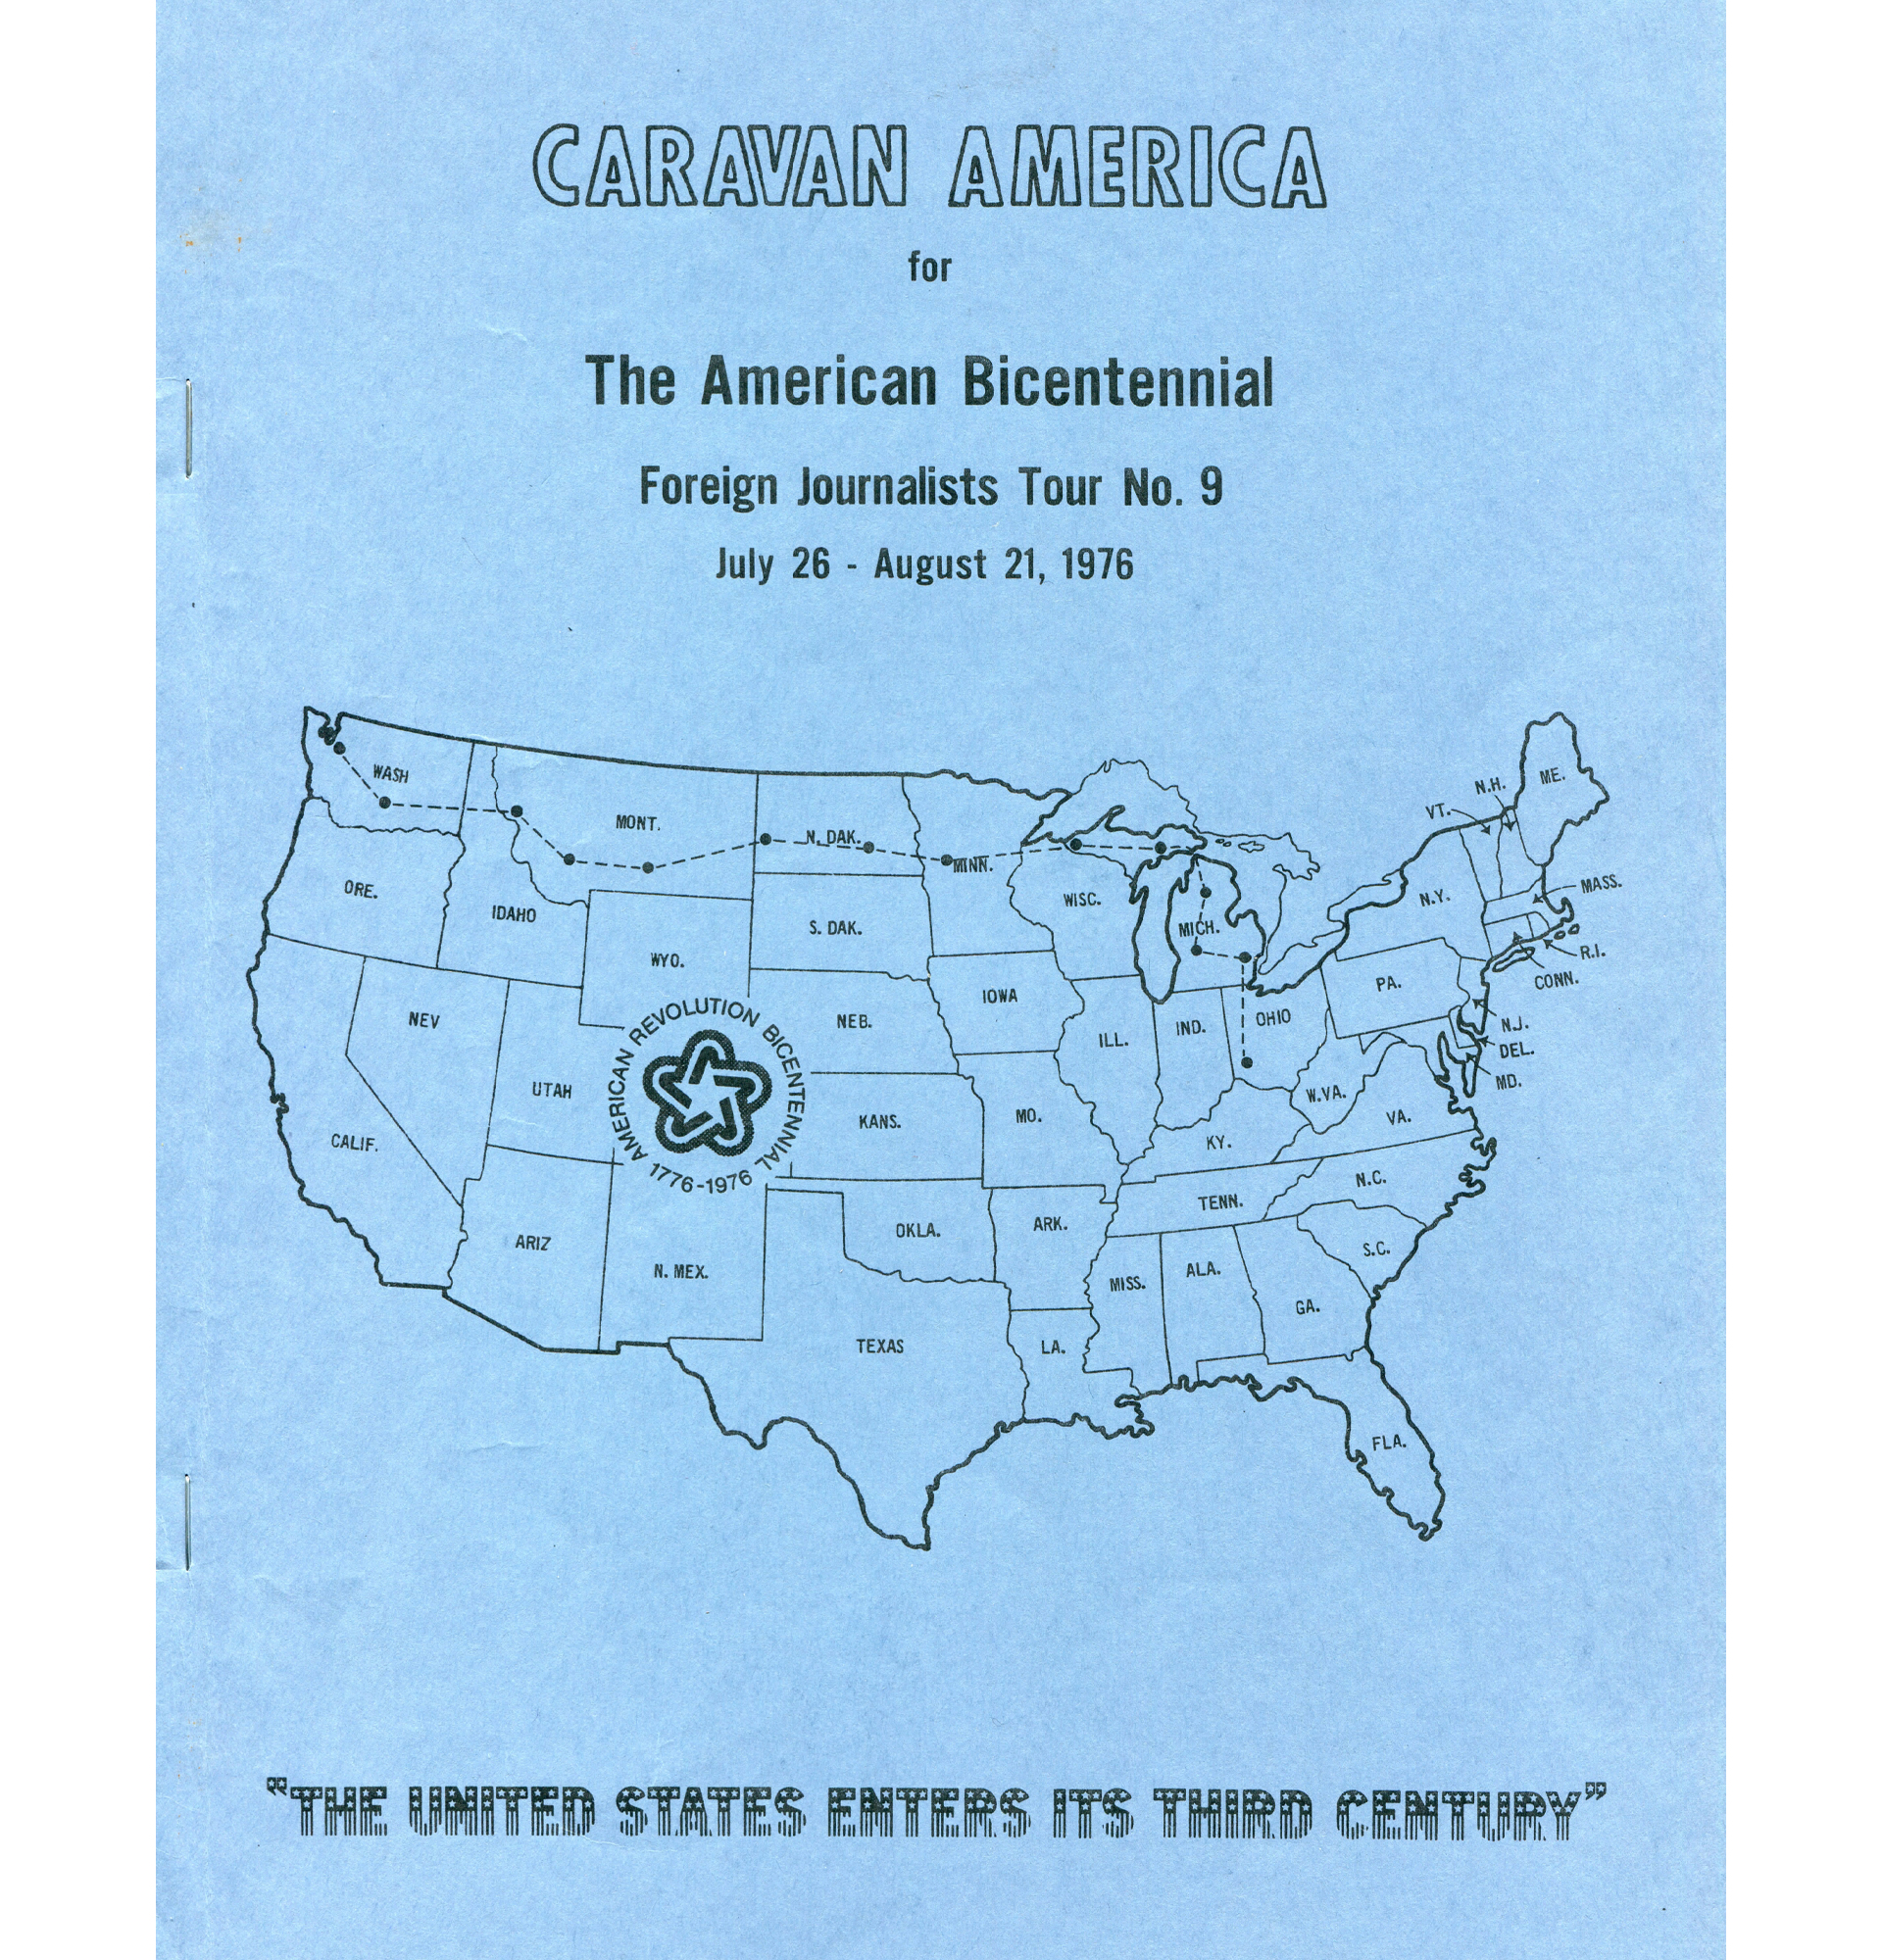 The journal for Airstream's Caravan America